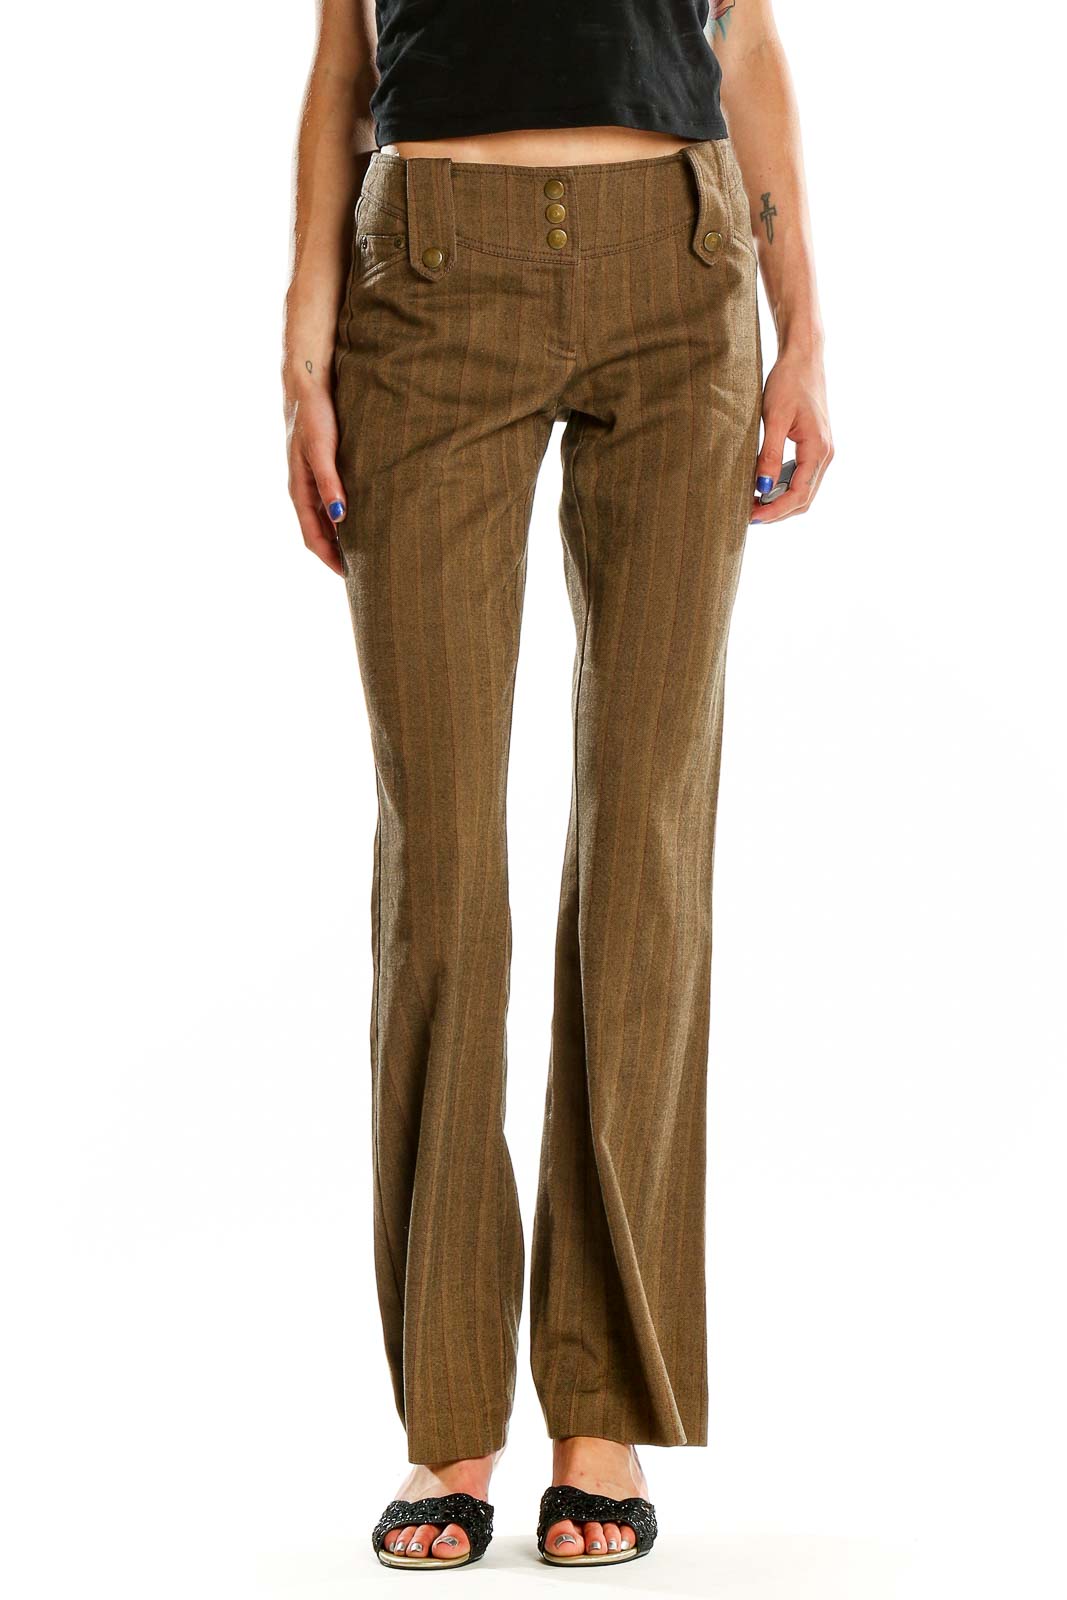 Brown Striped Retro Trouser Front